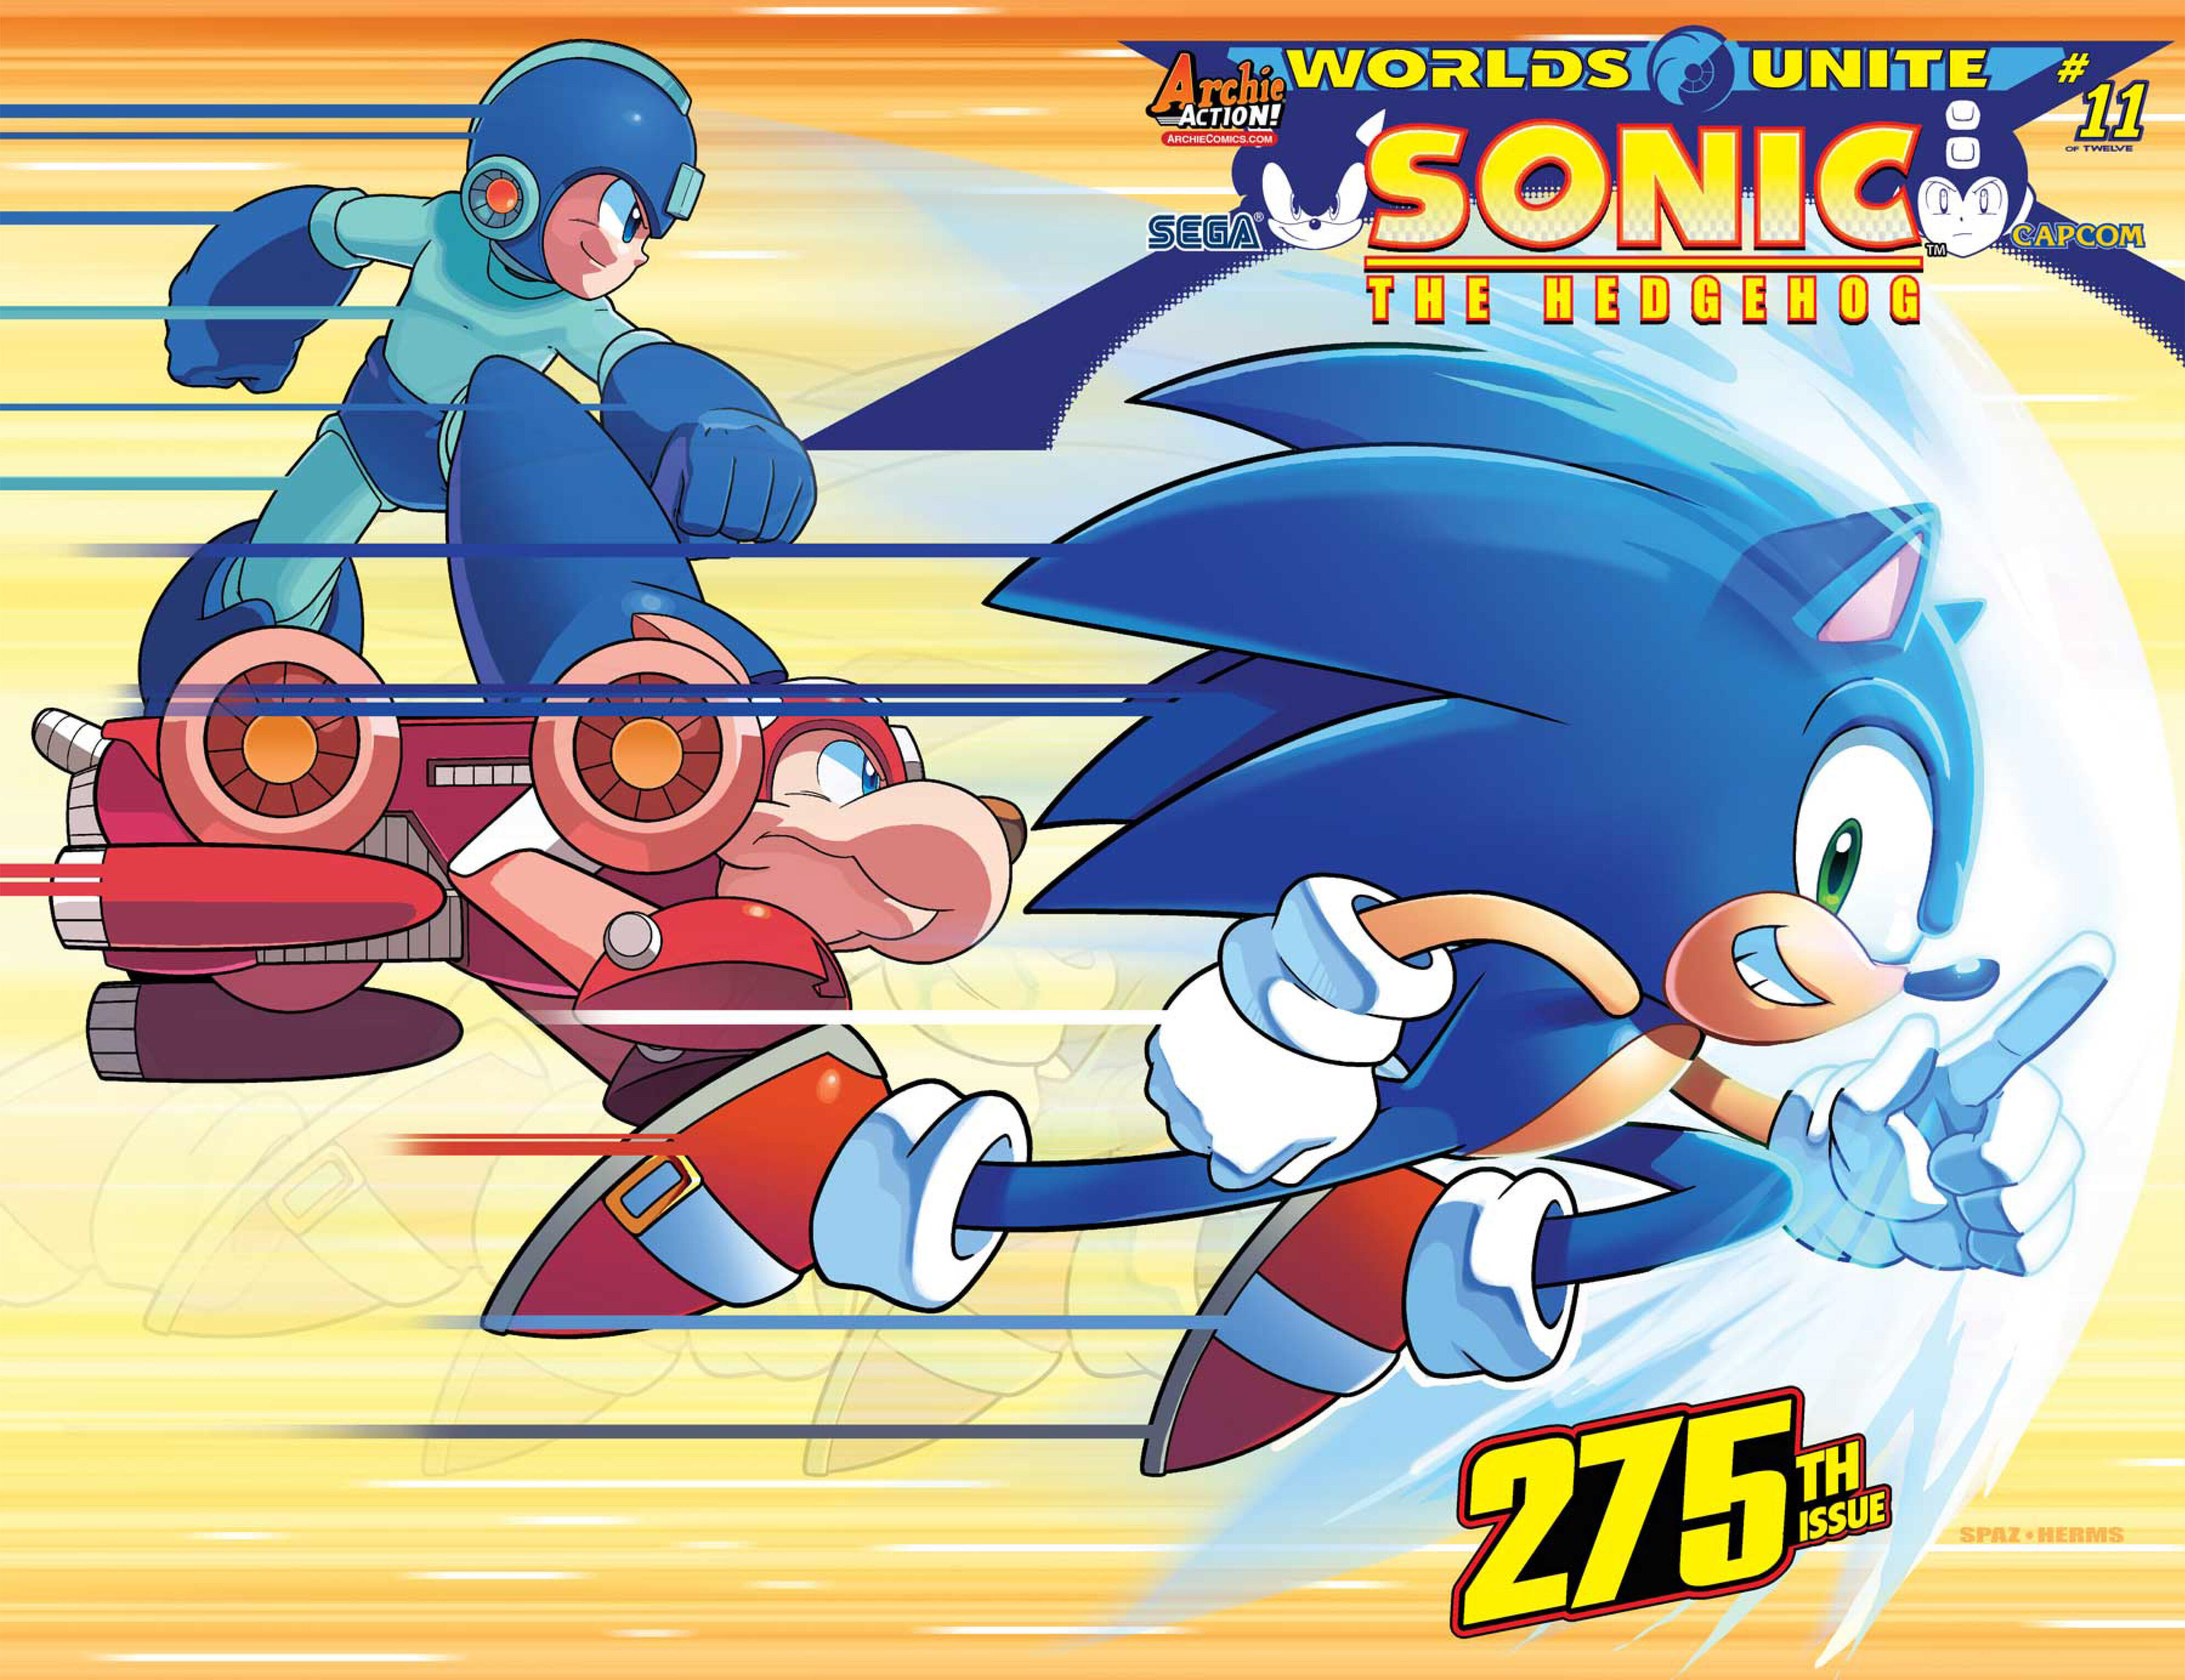 Sonic the Hedgehog Digital Comics on CD Collection. 